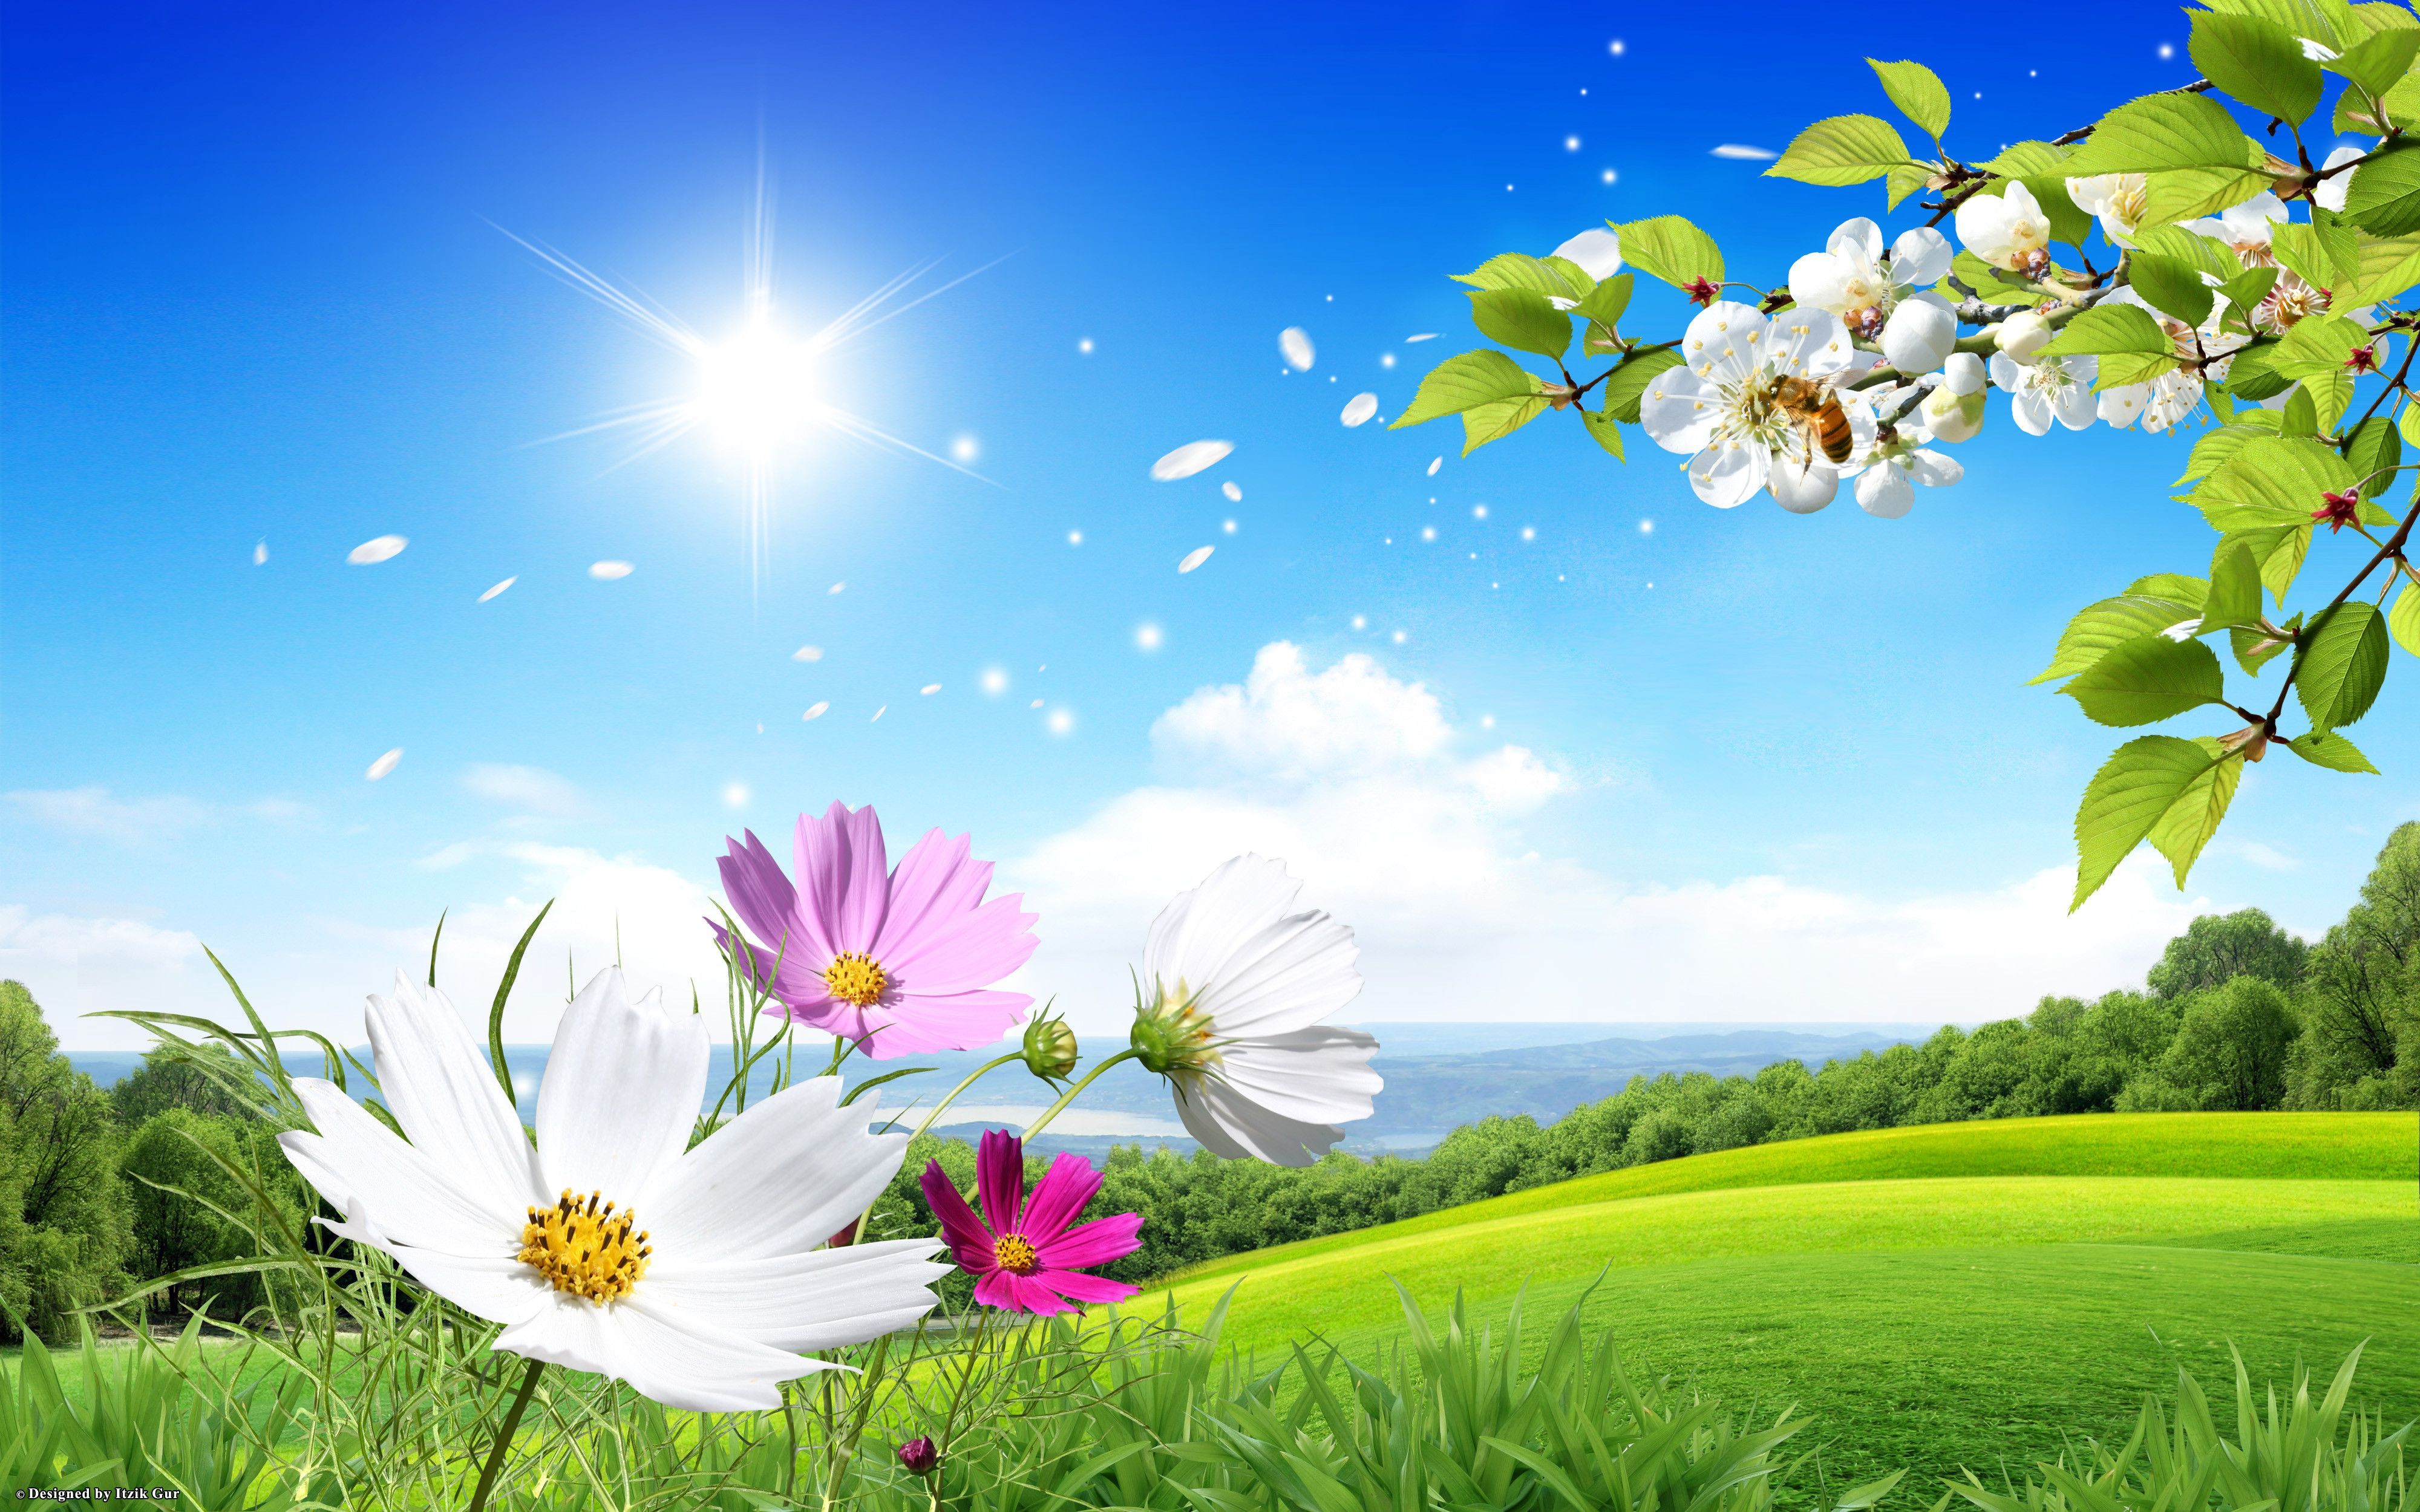 Download Free Wallpaper online. Beautiful summer wallpaper, Scenery wallpaper, Spring wallpaper